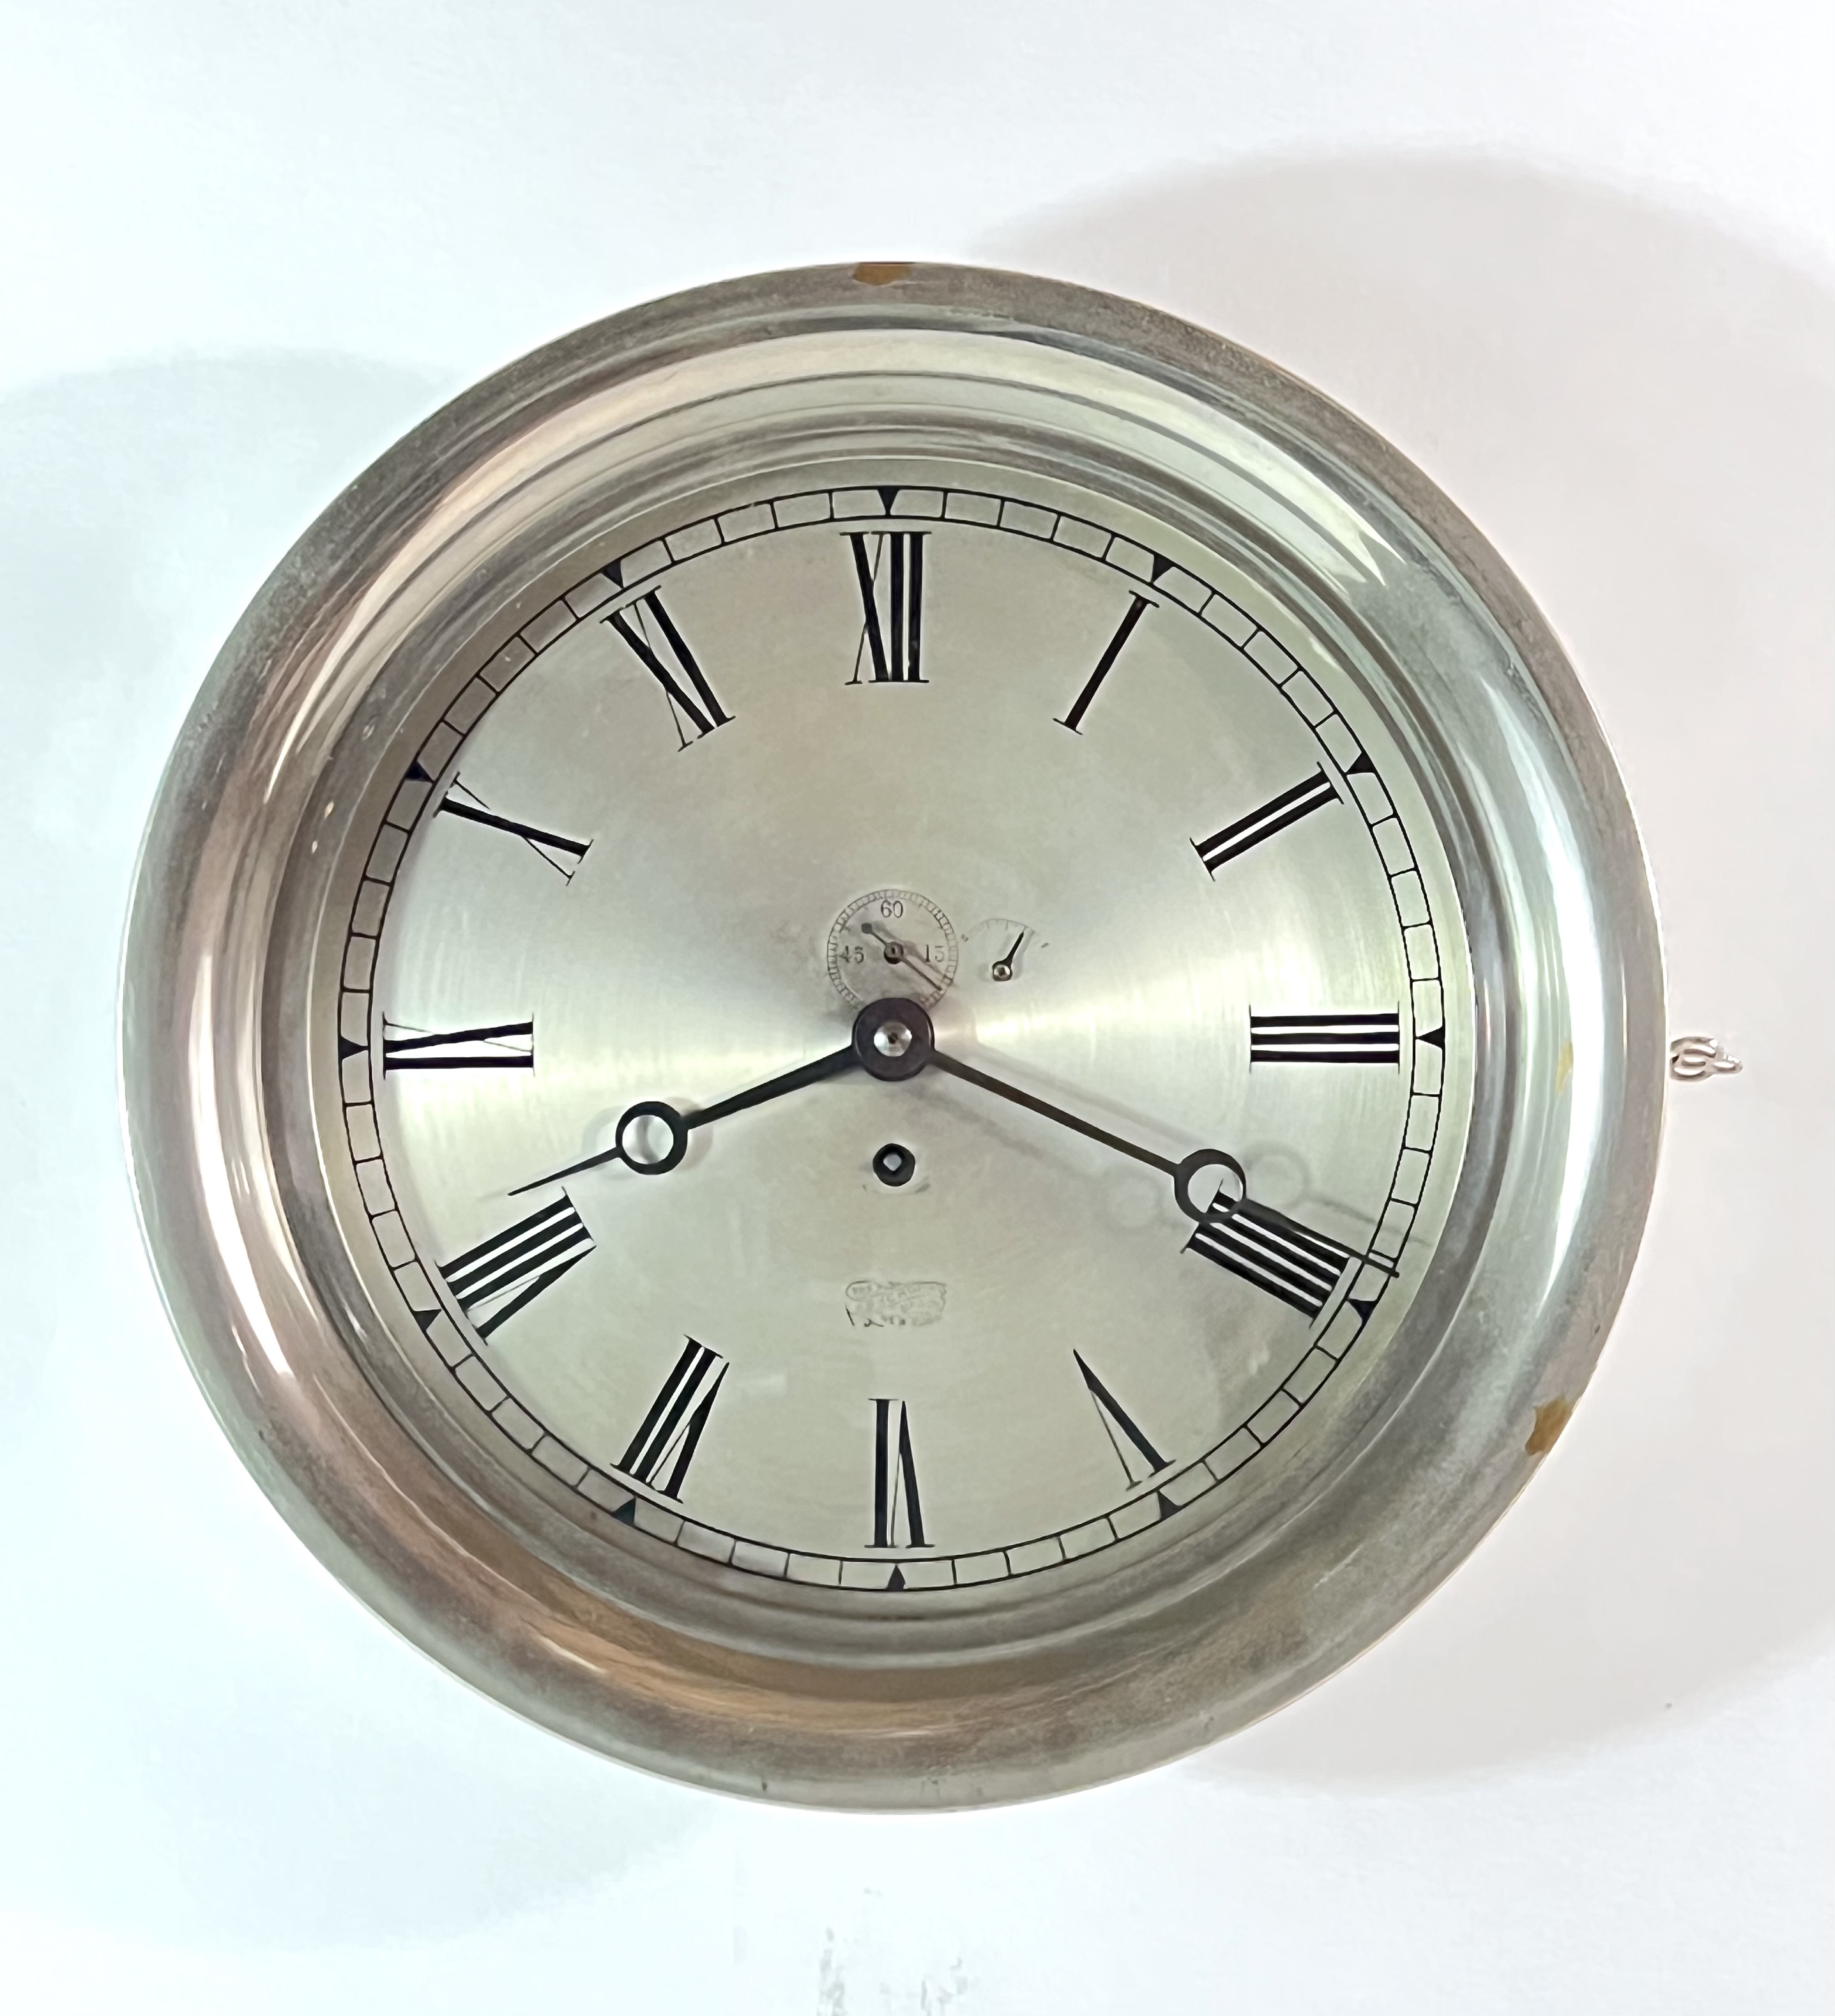 Fairhaven Manufacturing Co. 10 inch Marine Clock